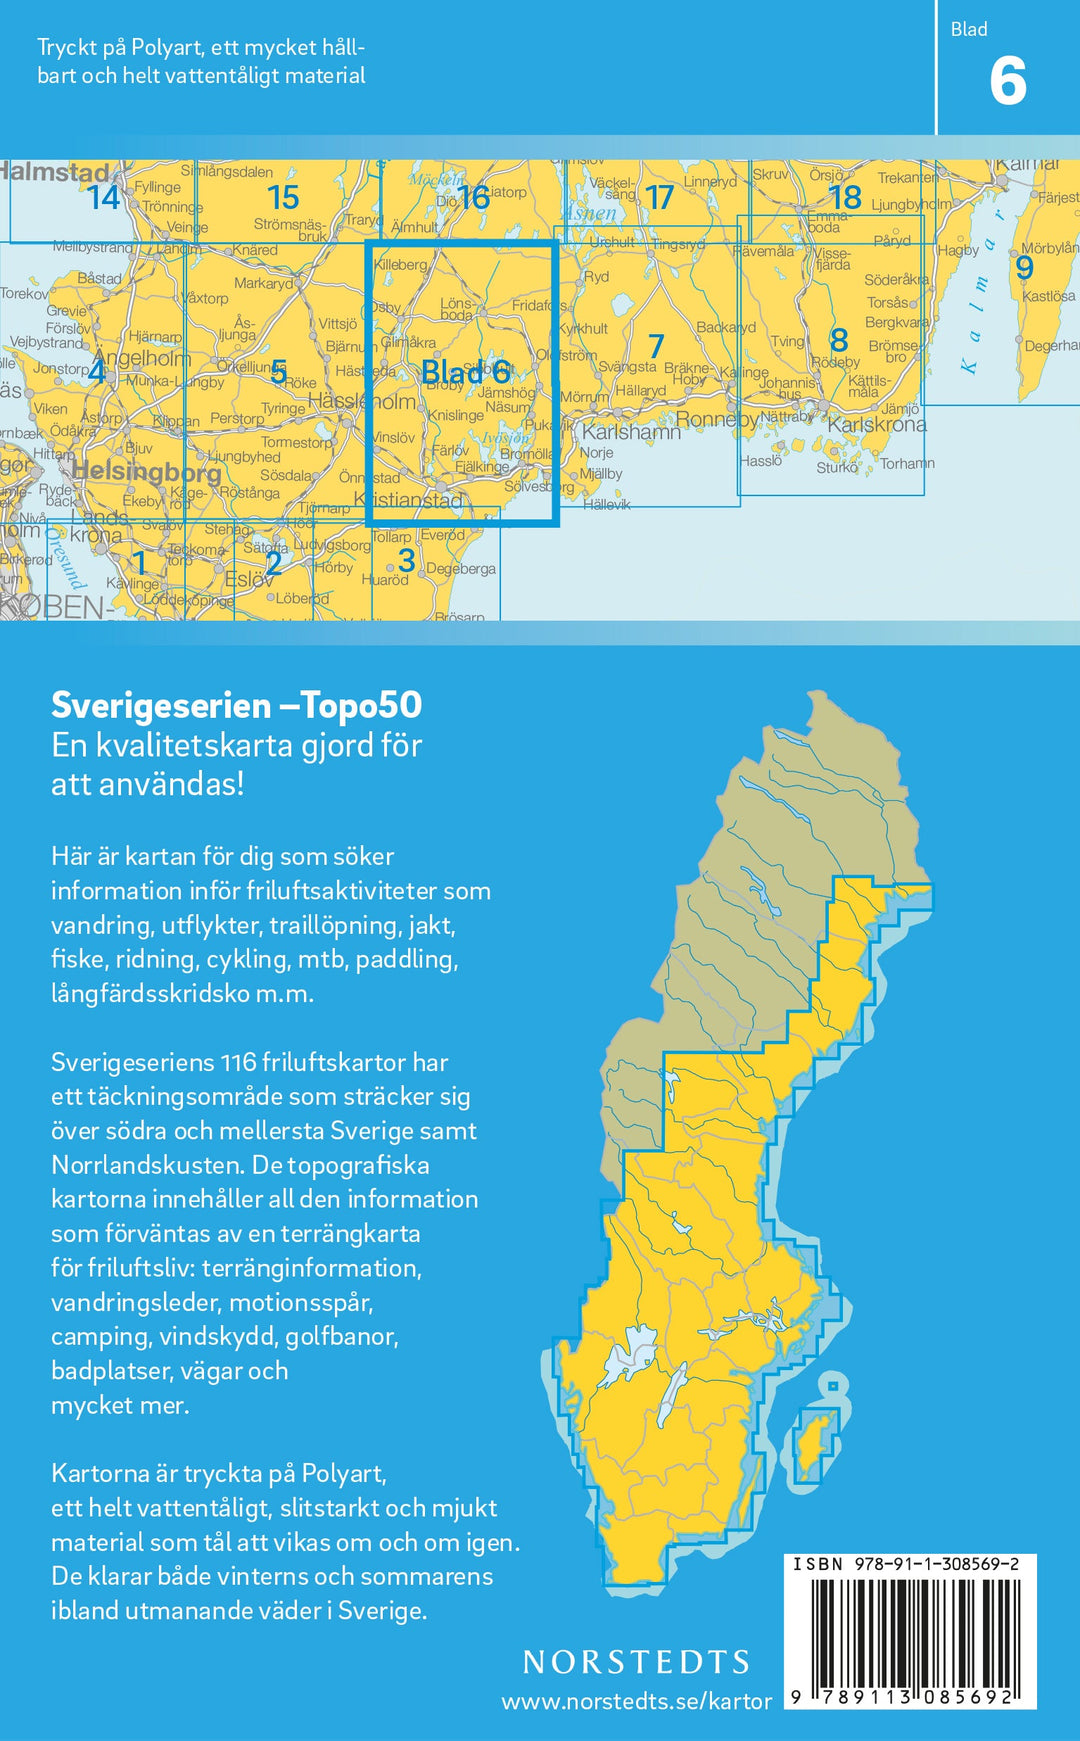 Carte topographique n° 06 - Kristianstad (Suède) | Norstedts - Sverigeserien carte pliée Norstedts 